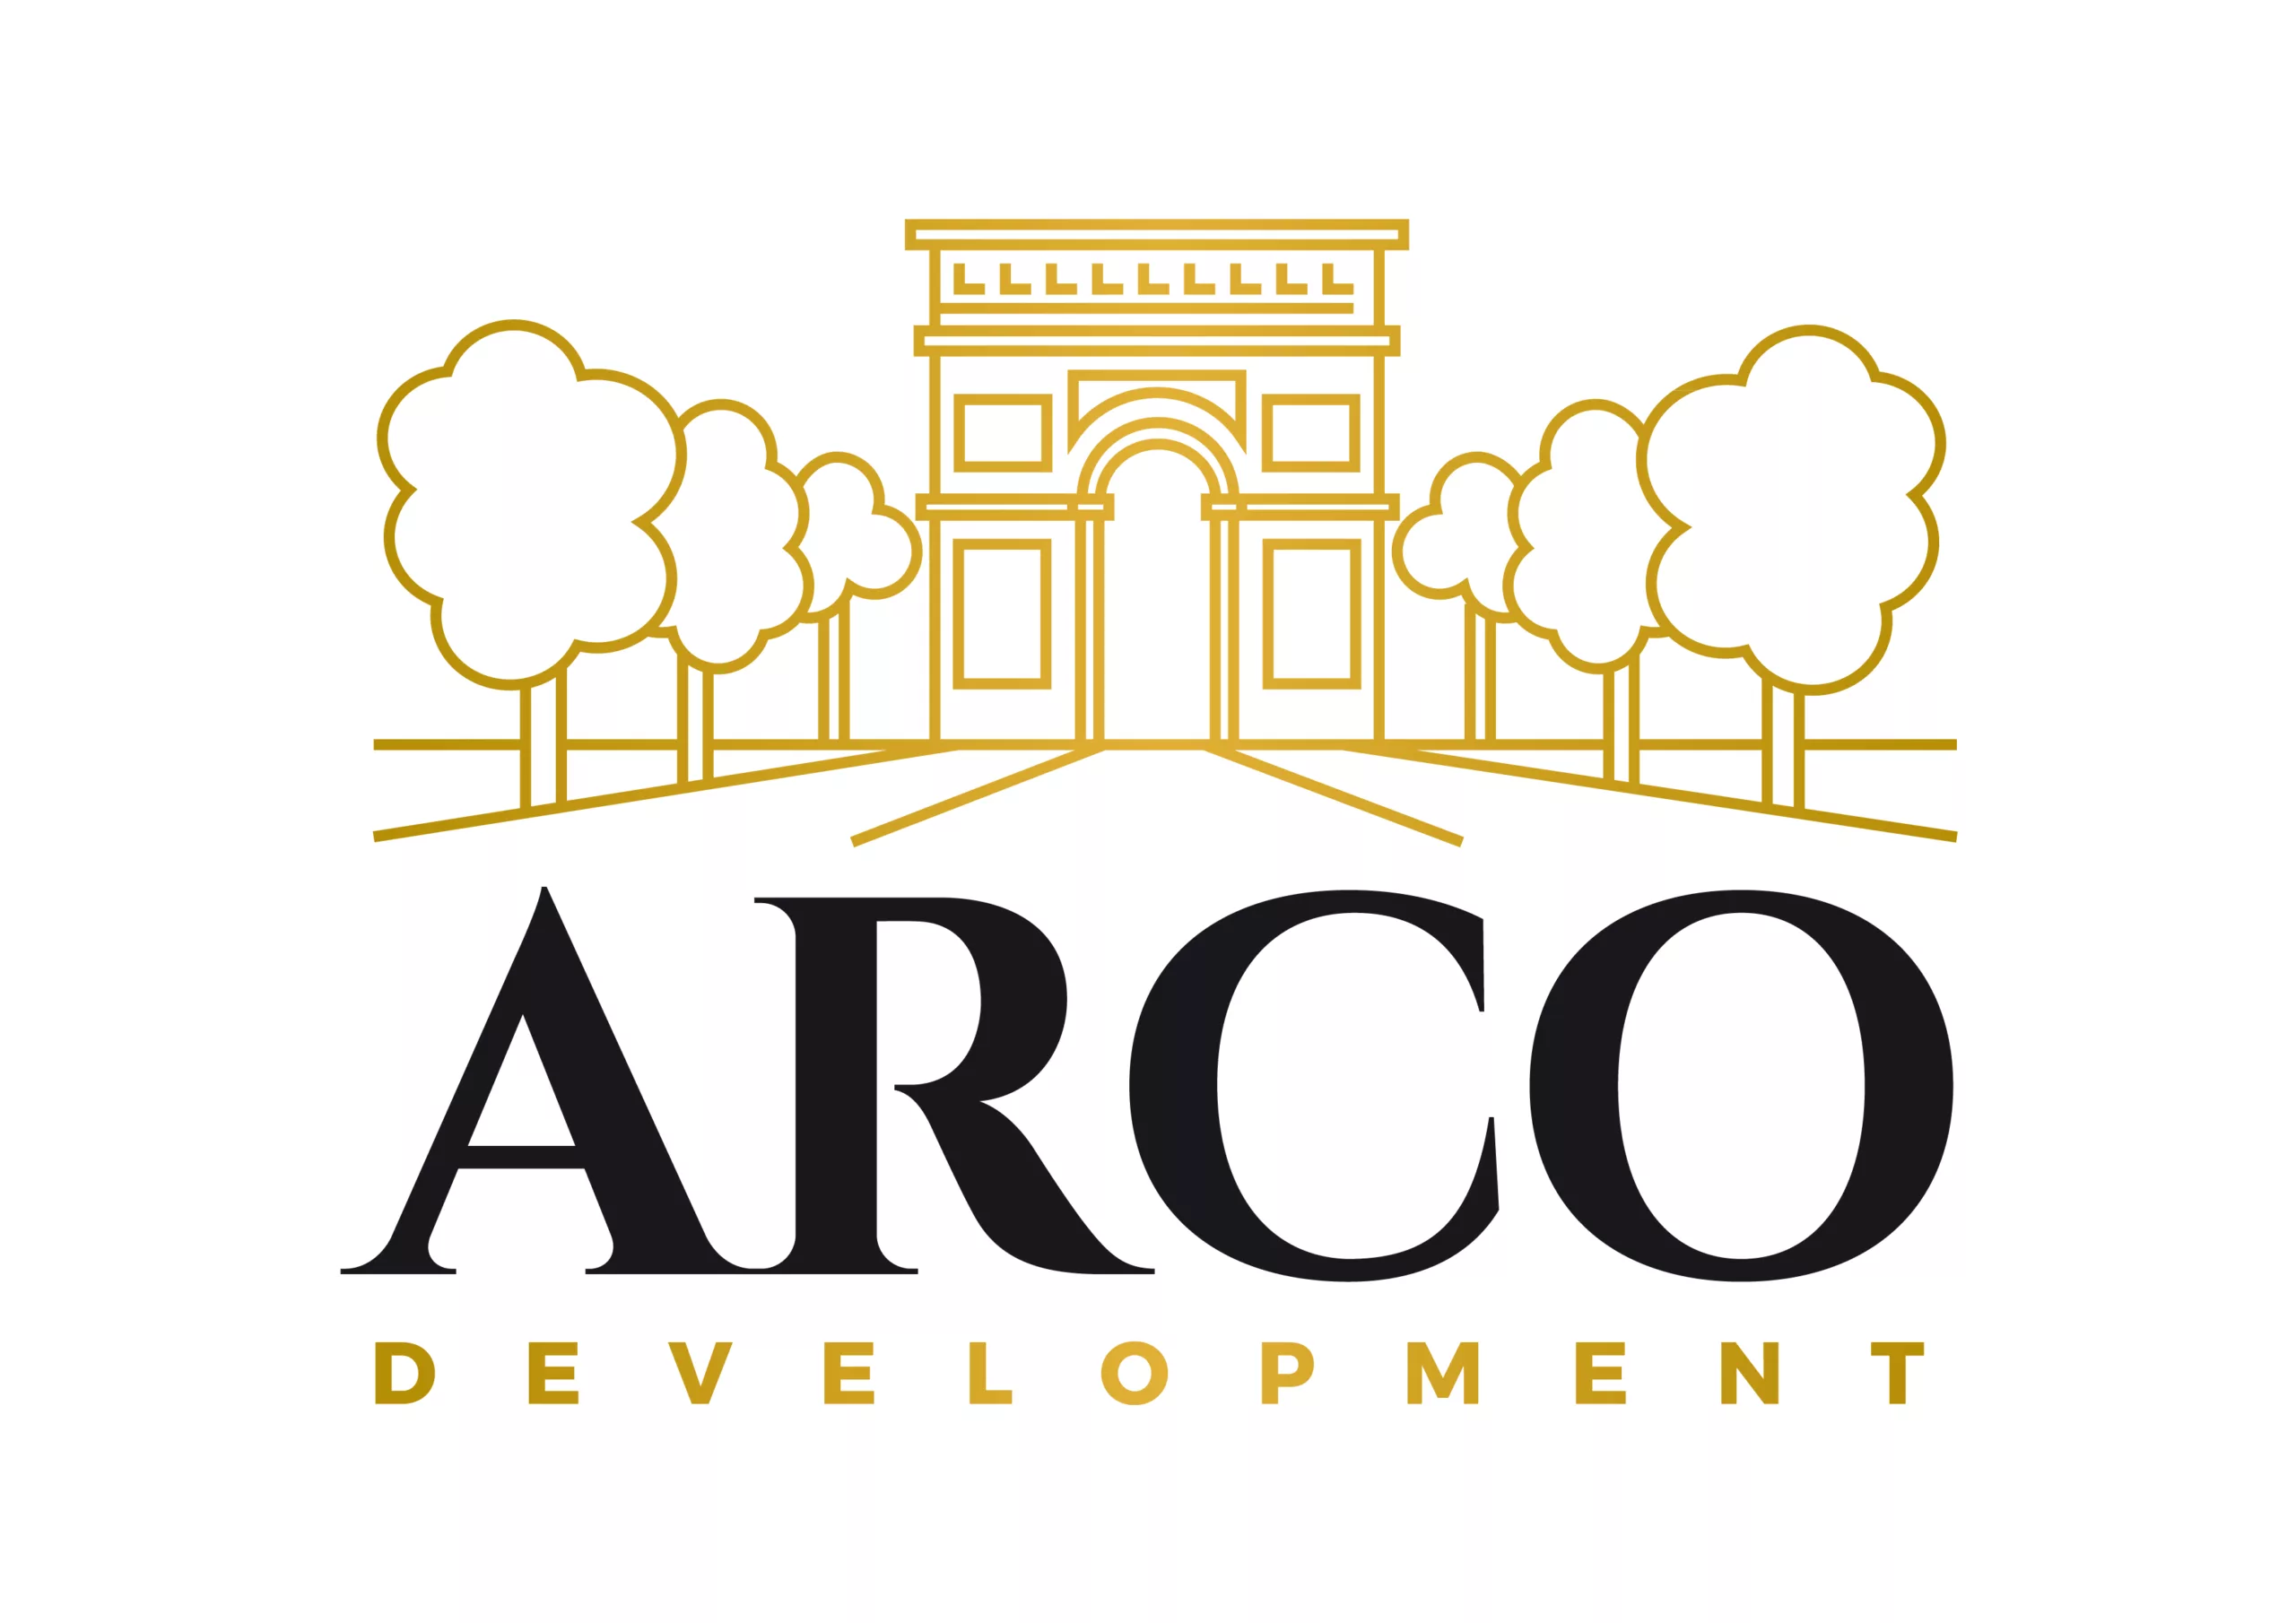 ARCO development